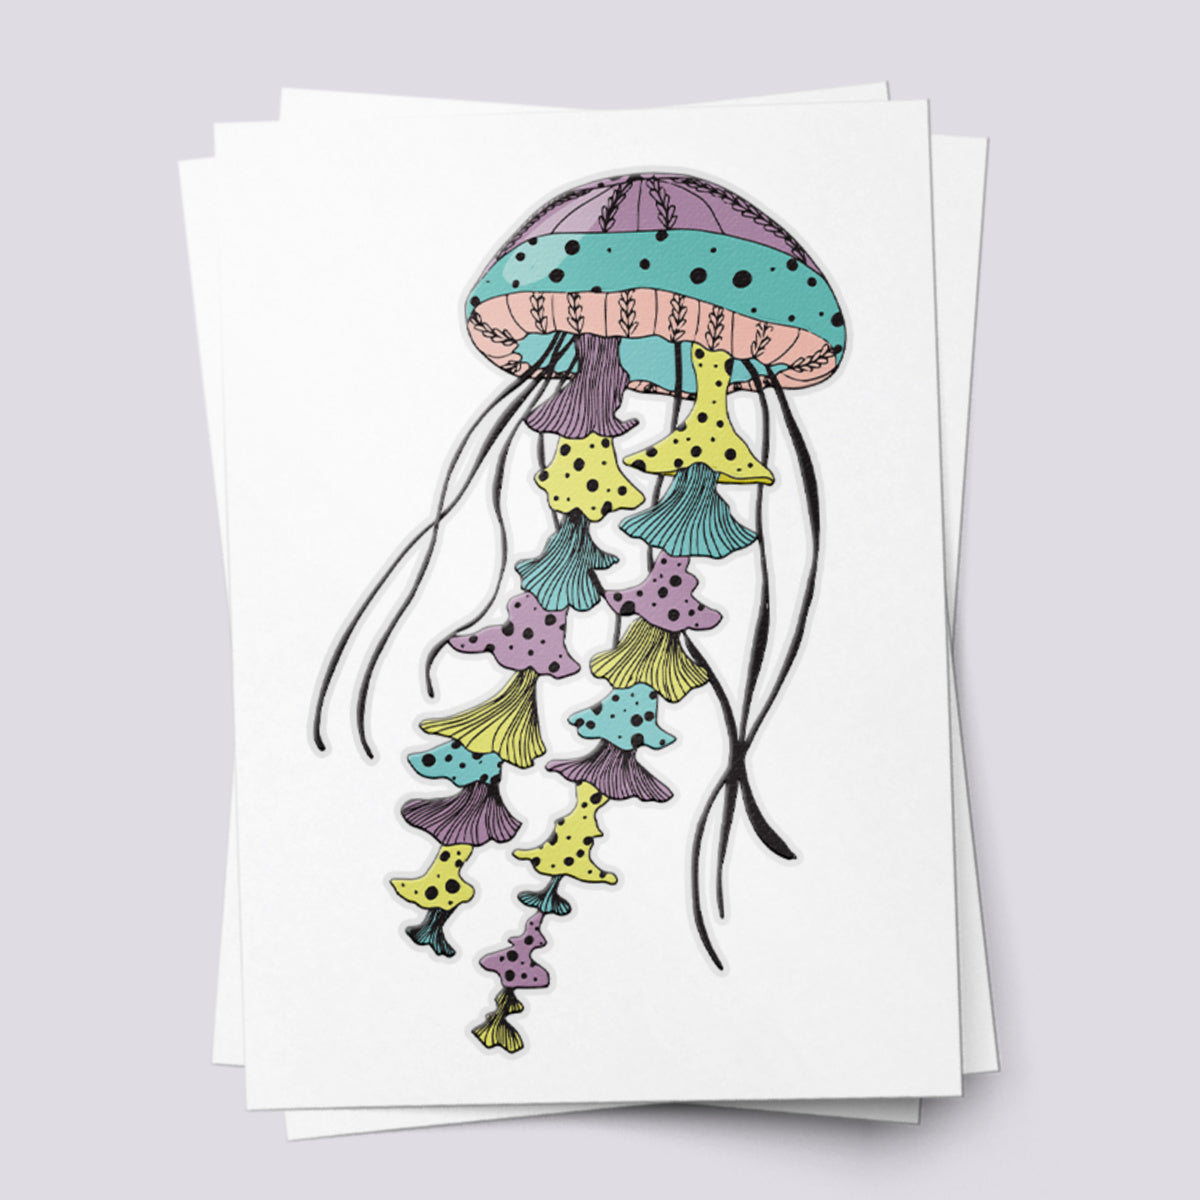 Magic Jellyfish Temporary Tattoos - Underwater Fun for Parties